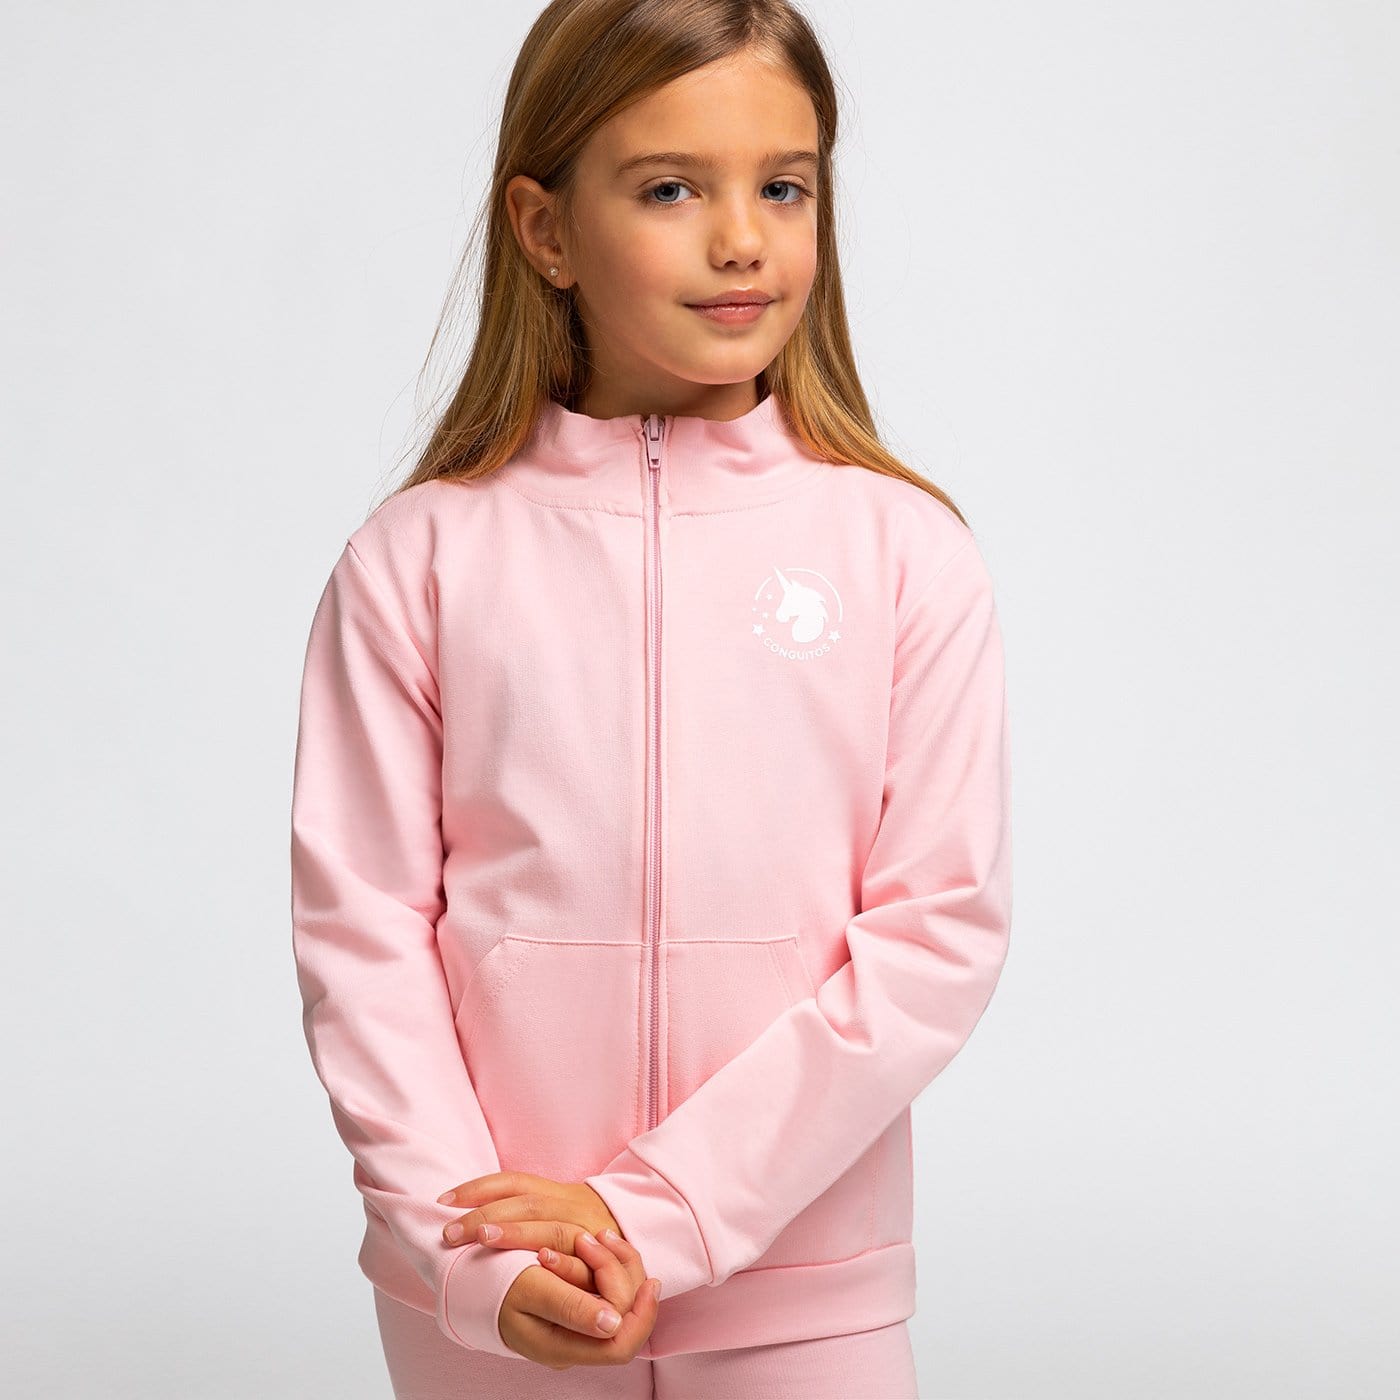 CONGUITOS TEXTIL Clothing Girl's Pink Sport Jacket